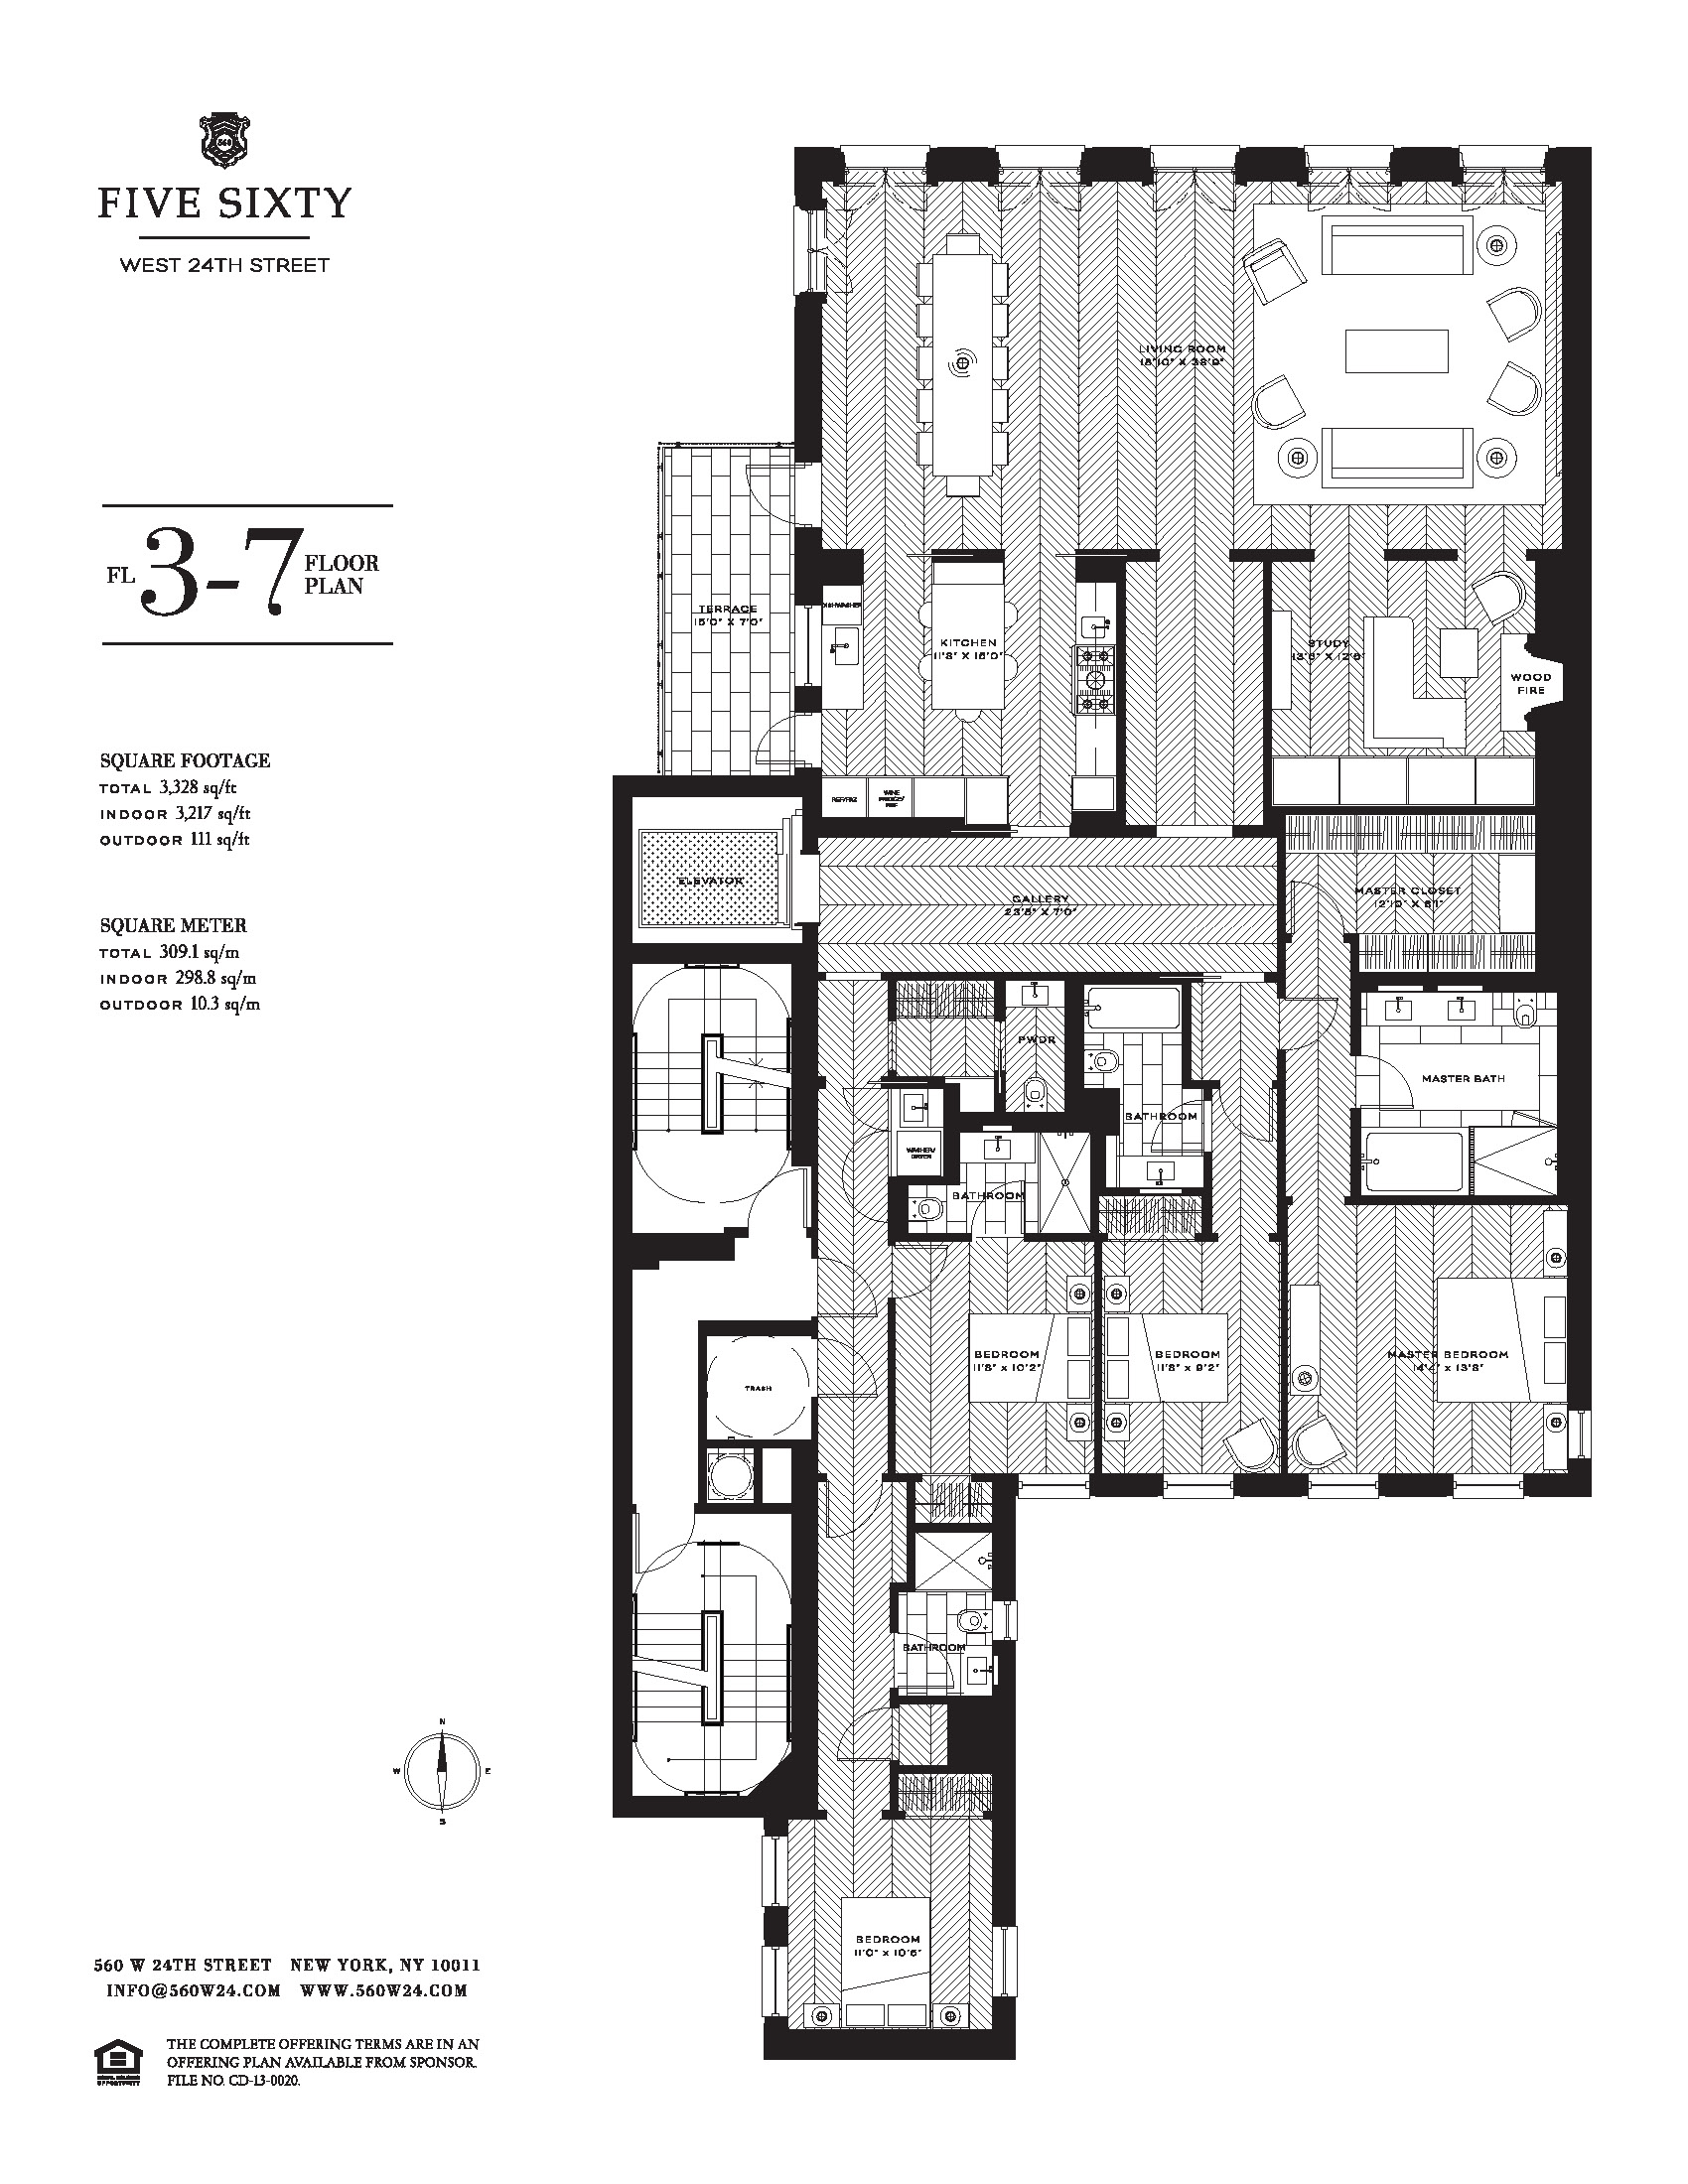 Floorplan for 560 West 24th Street, 5